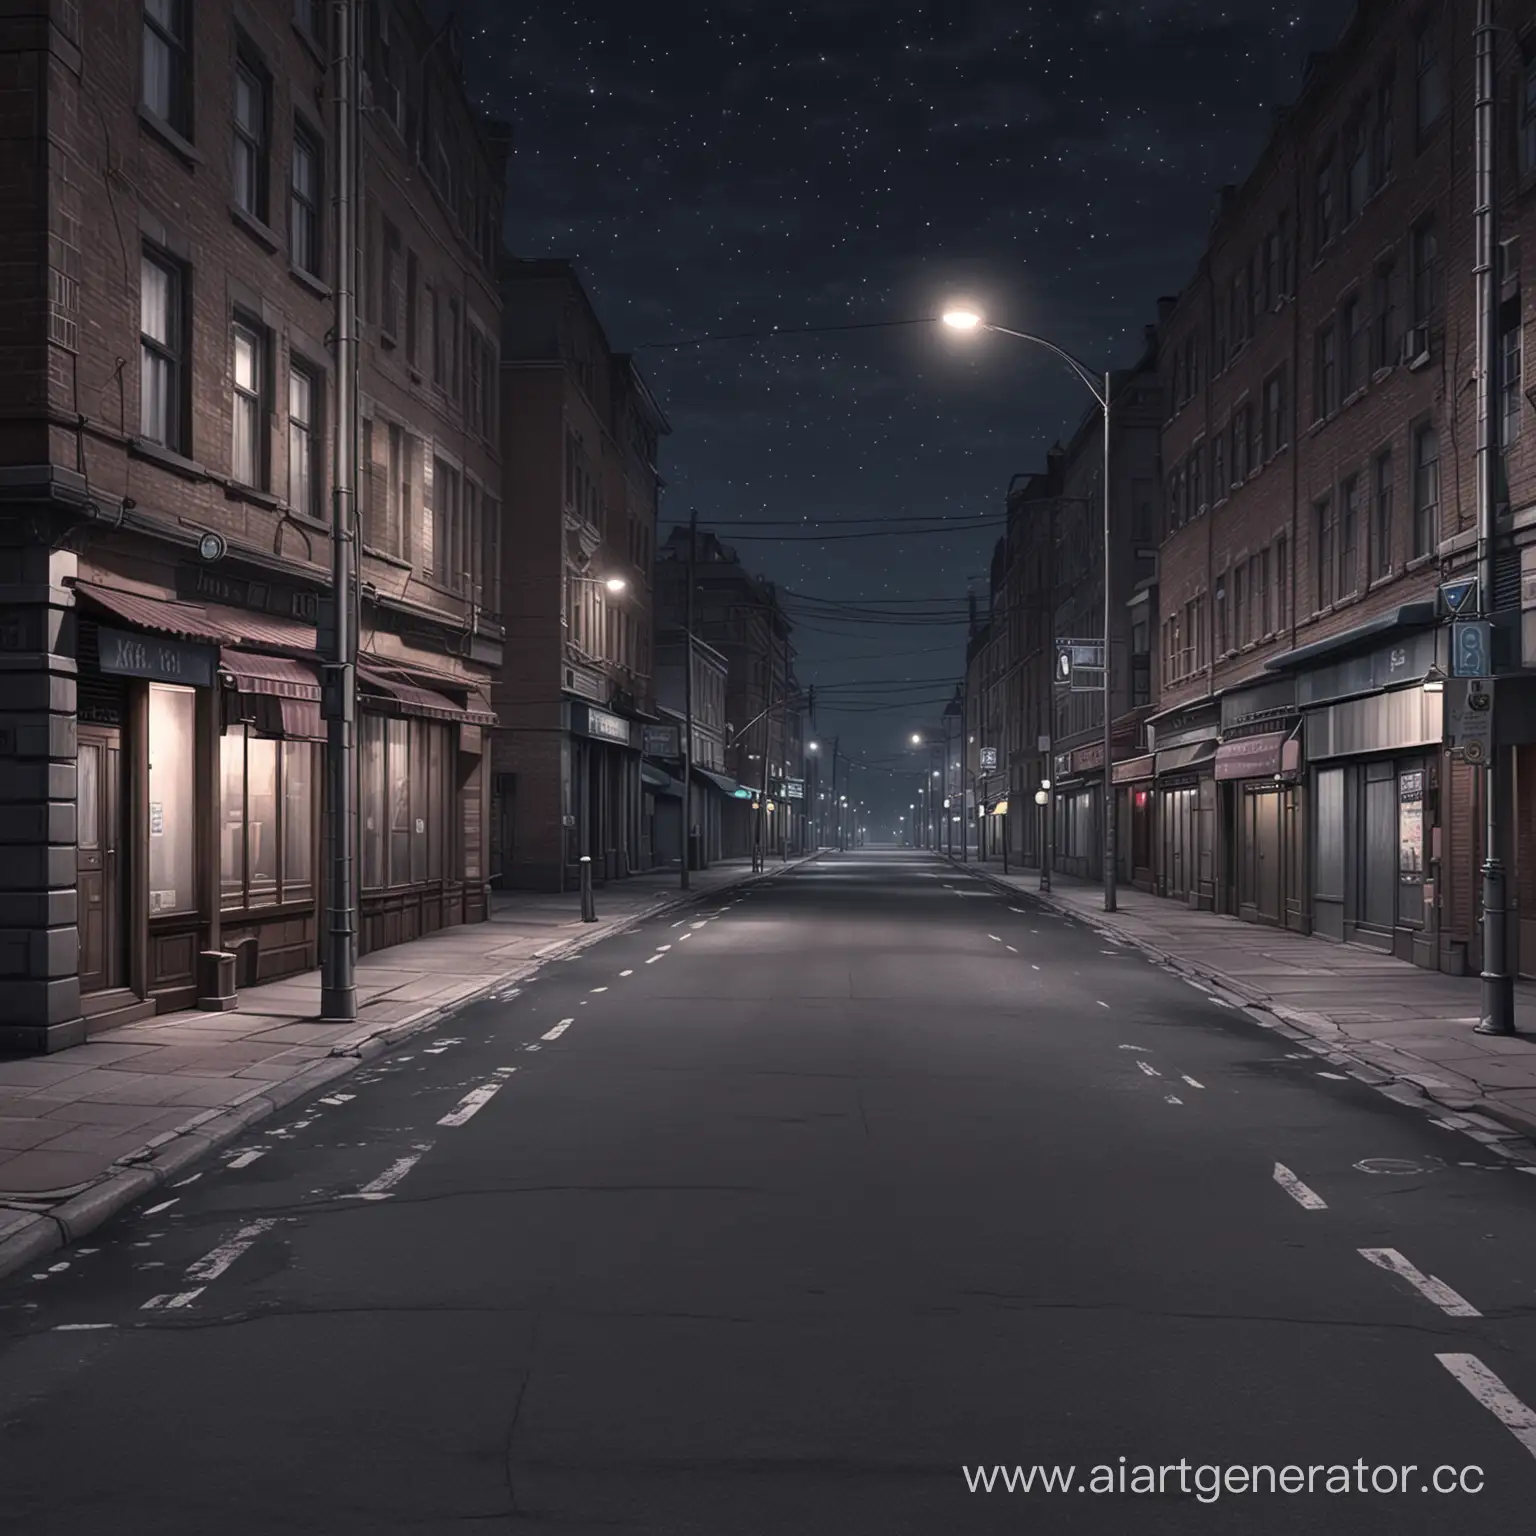 Nocturnal-Urban-Scene-City-Street-at-Night